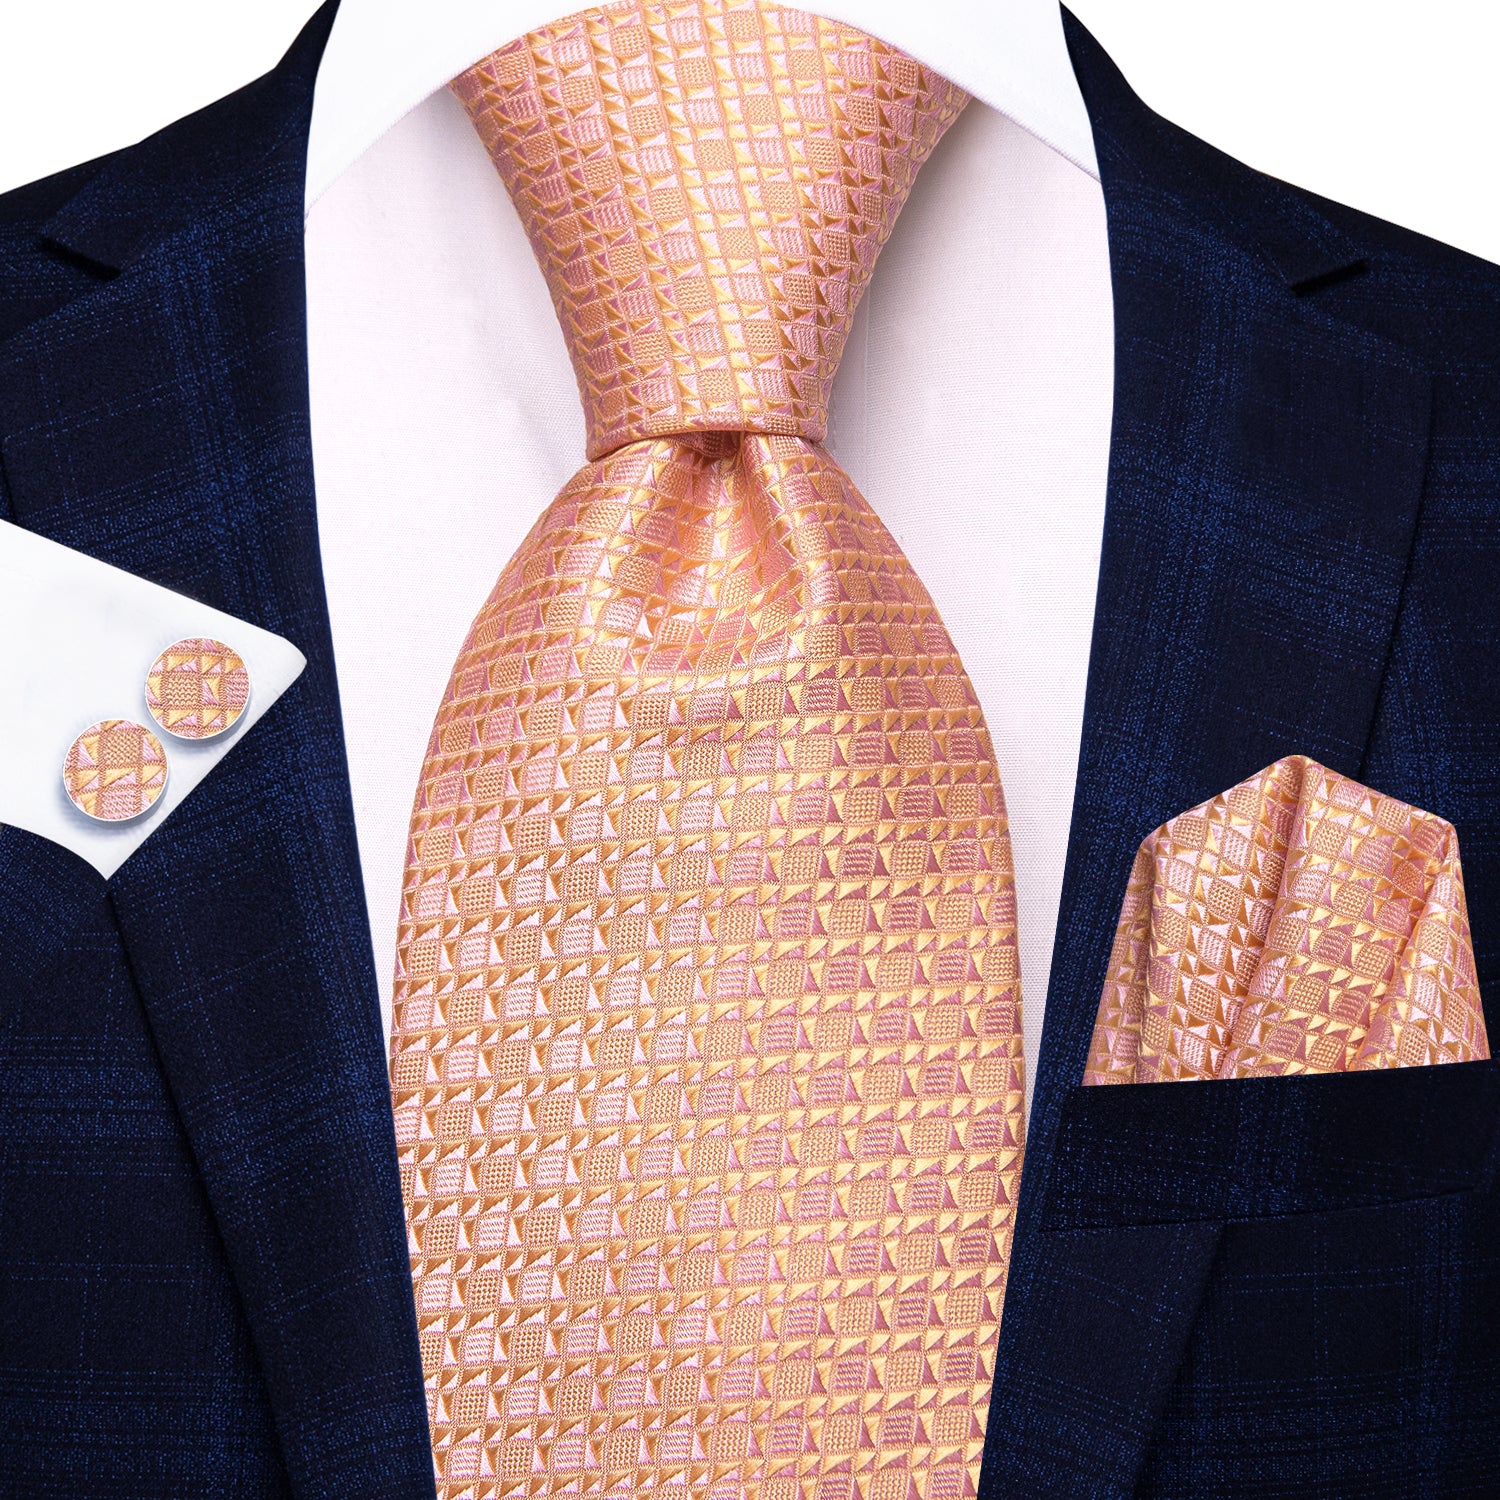 Hi-Tie Pink Yellow Novelty Men's Tie Pocket Square Cufflinks Set